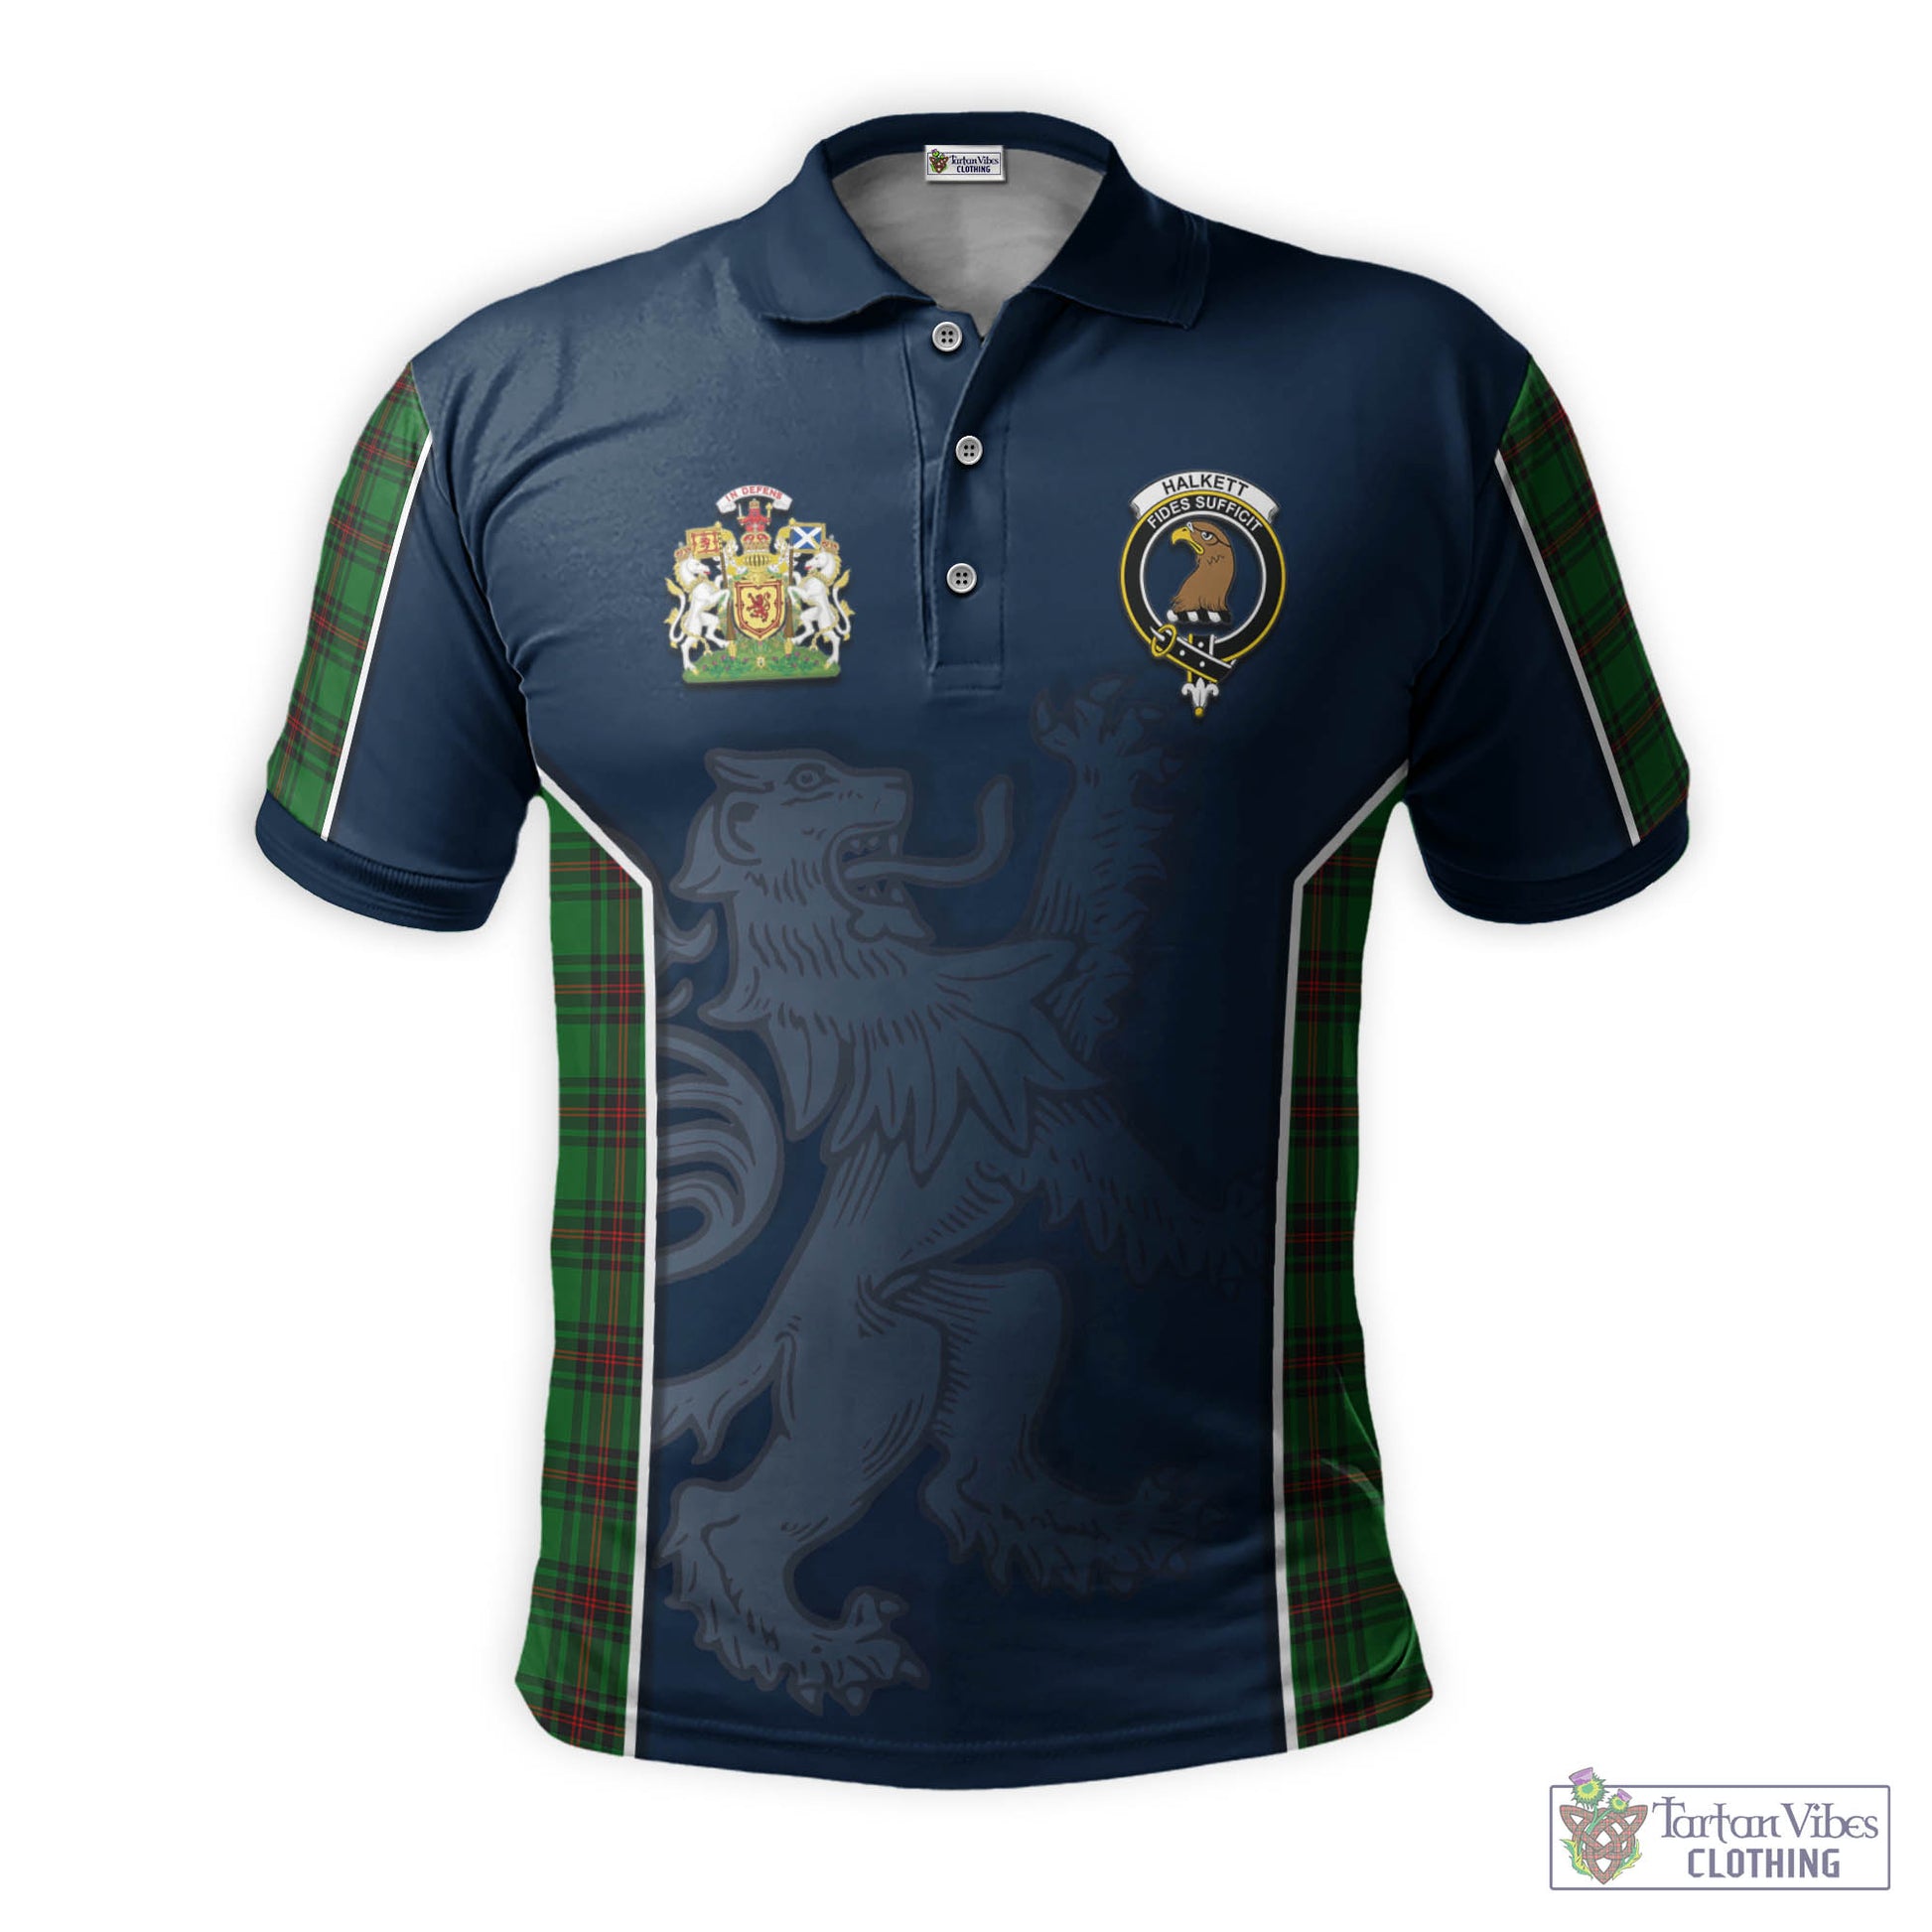 Tartan Vibes Clothing Halkett Tartan Men's Polo Shirt with Family Crest and Lion Rampant Vibes Sport Style